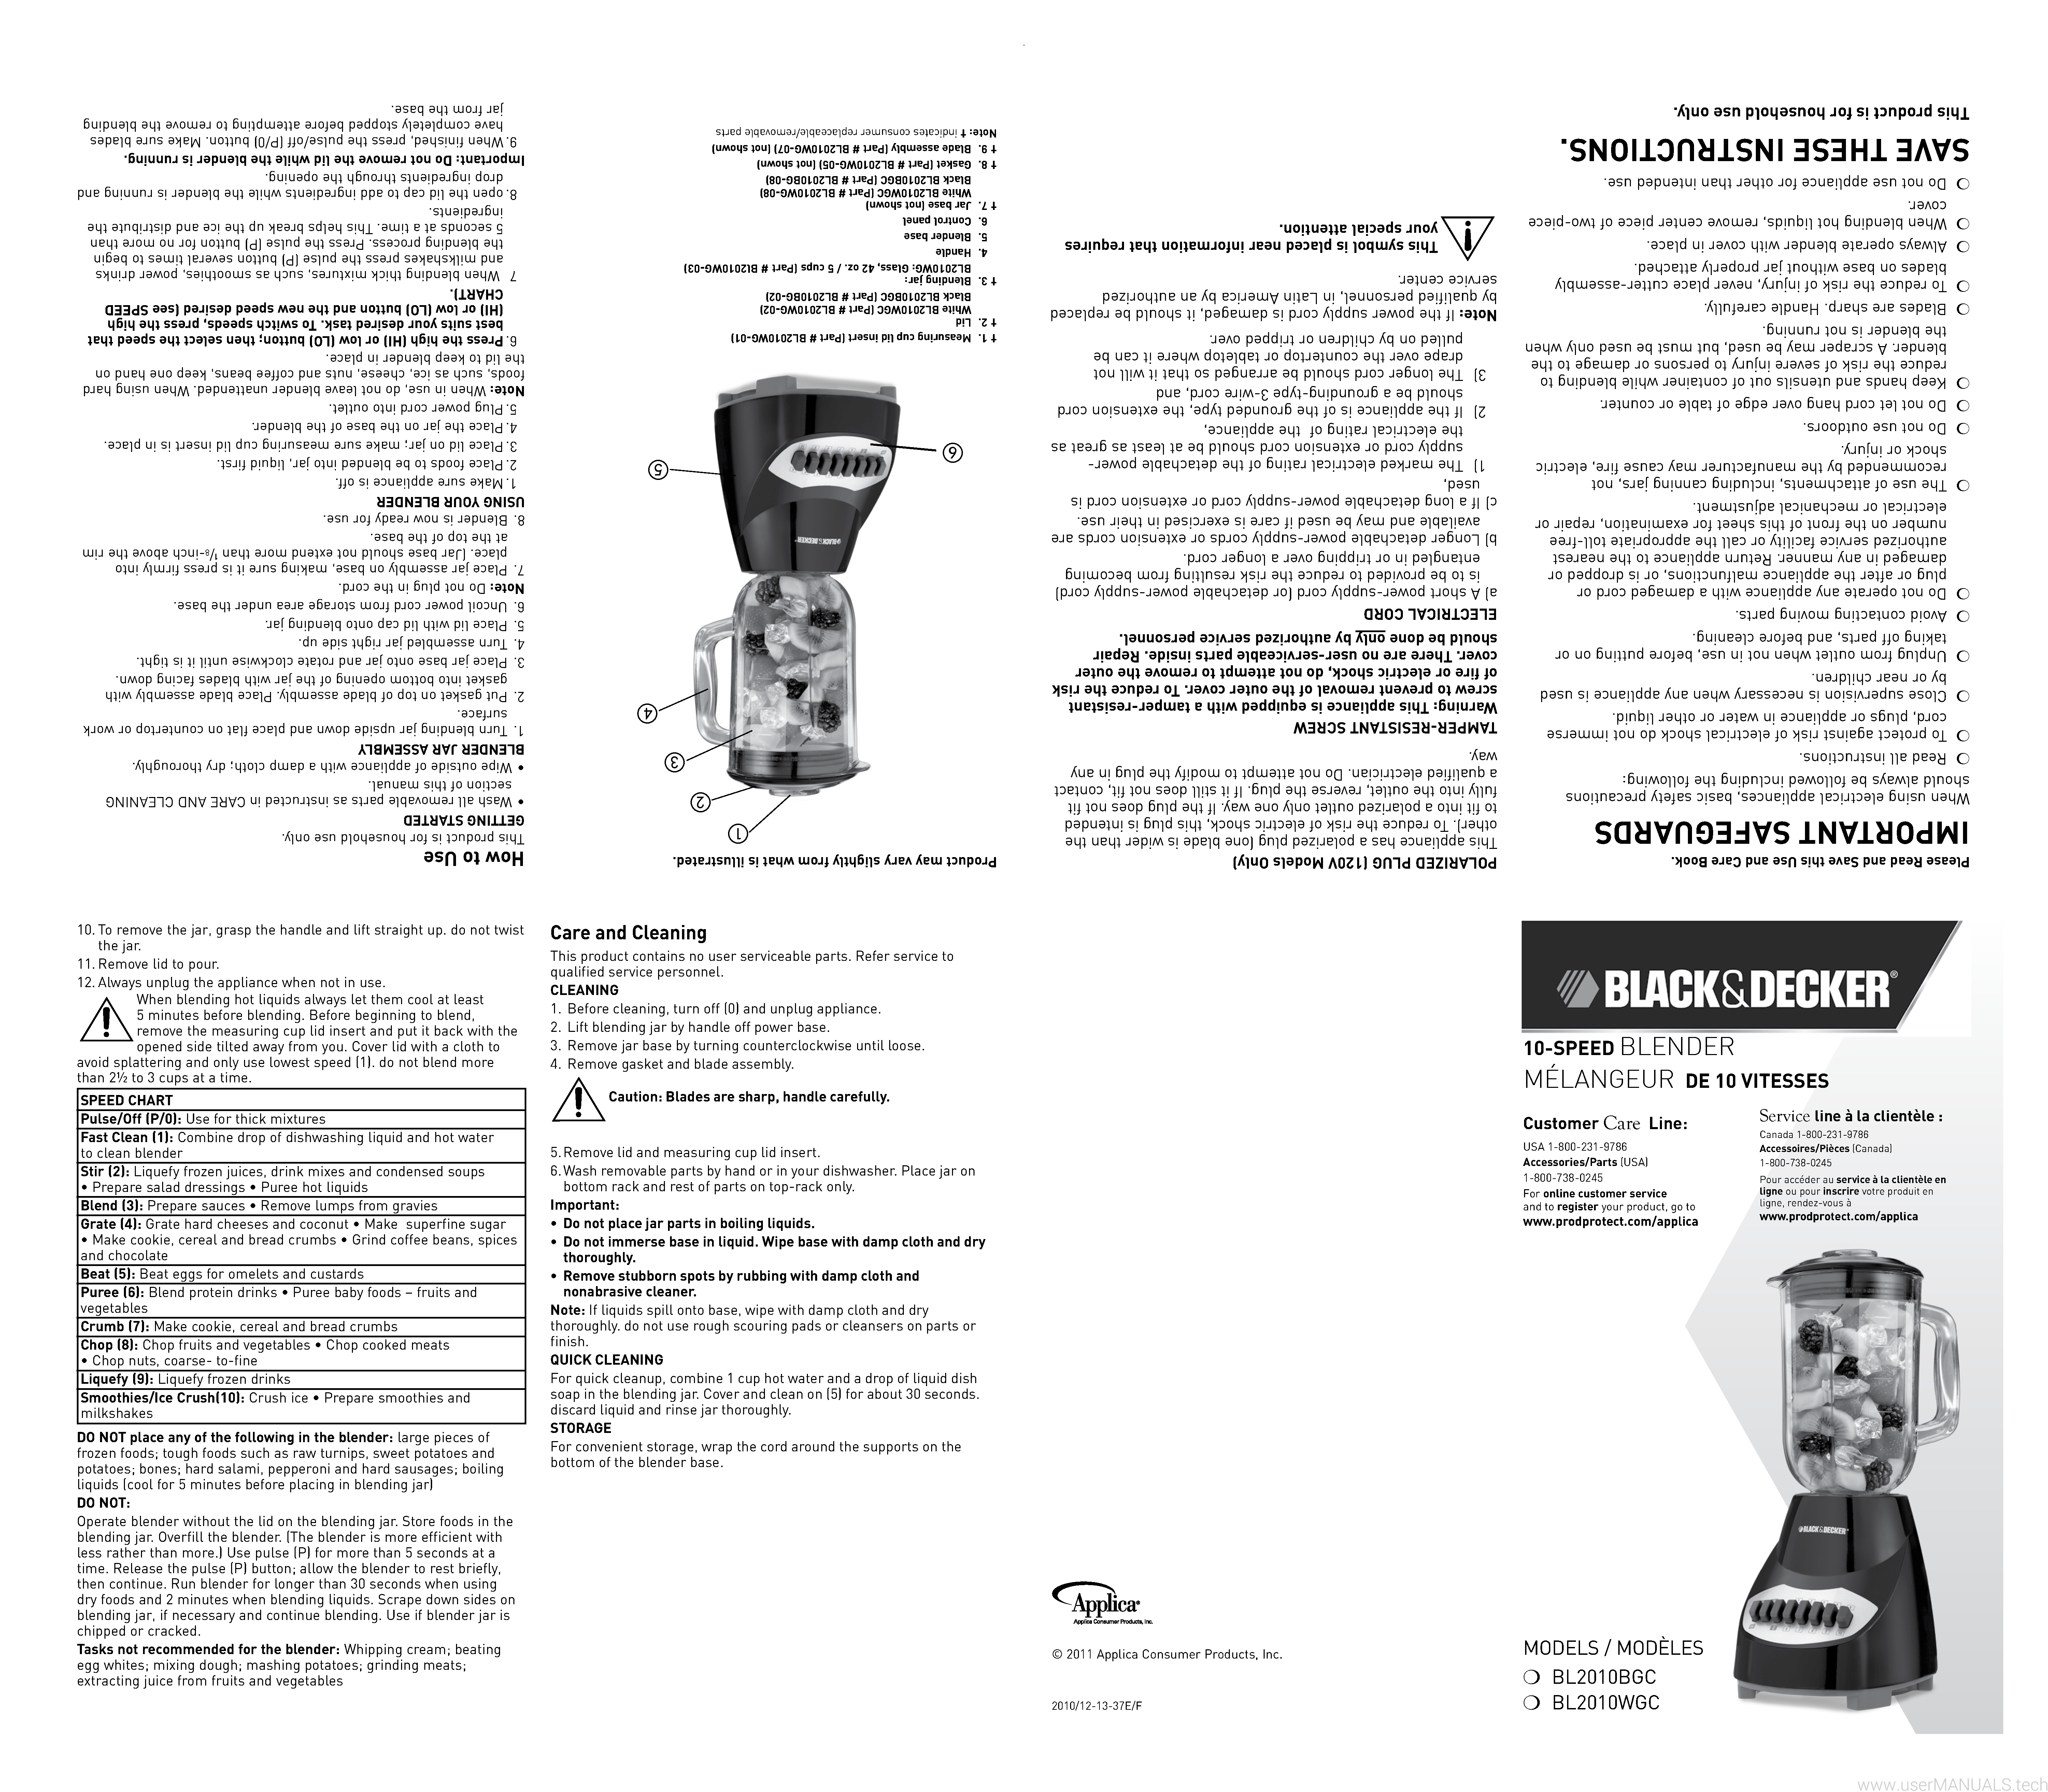 blender 2.79 manual pdf download